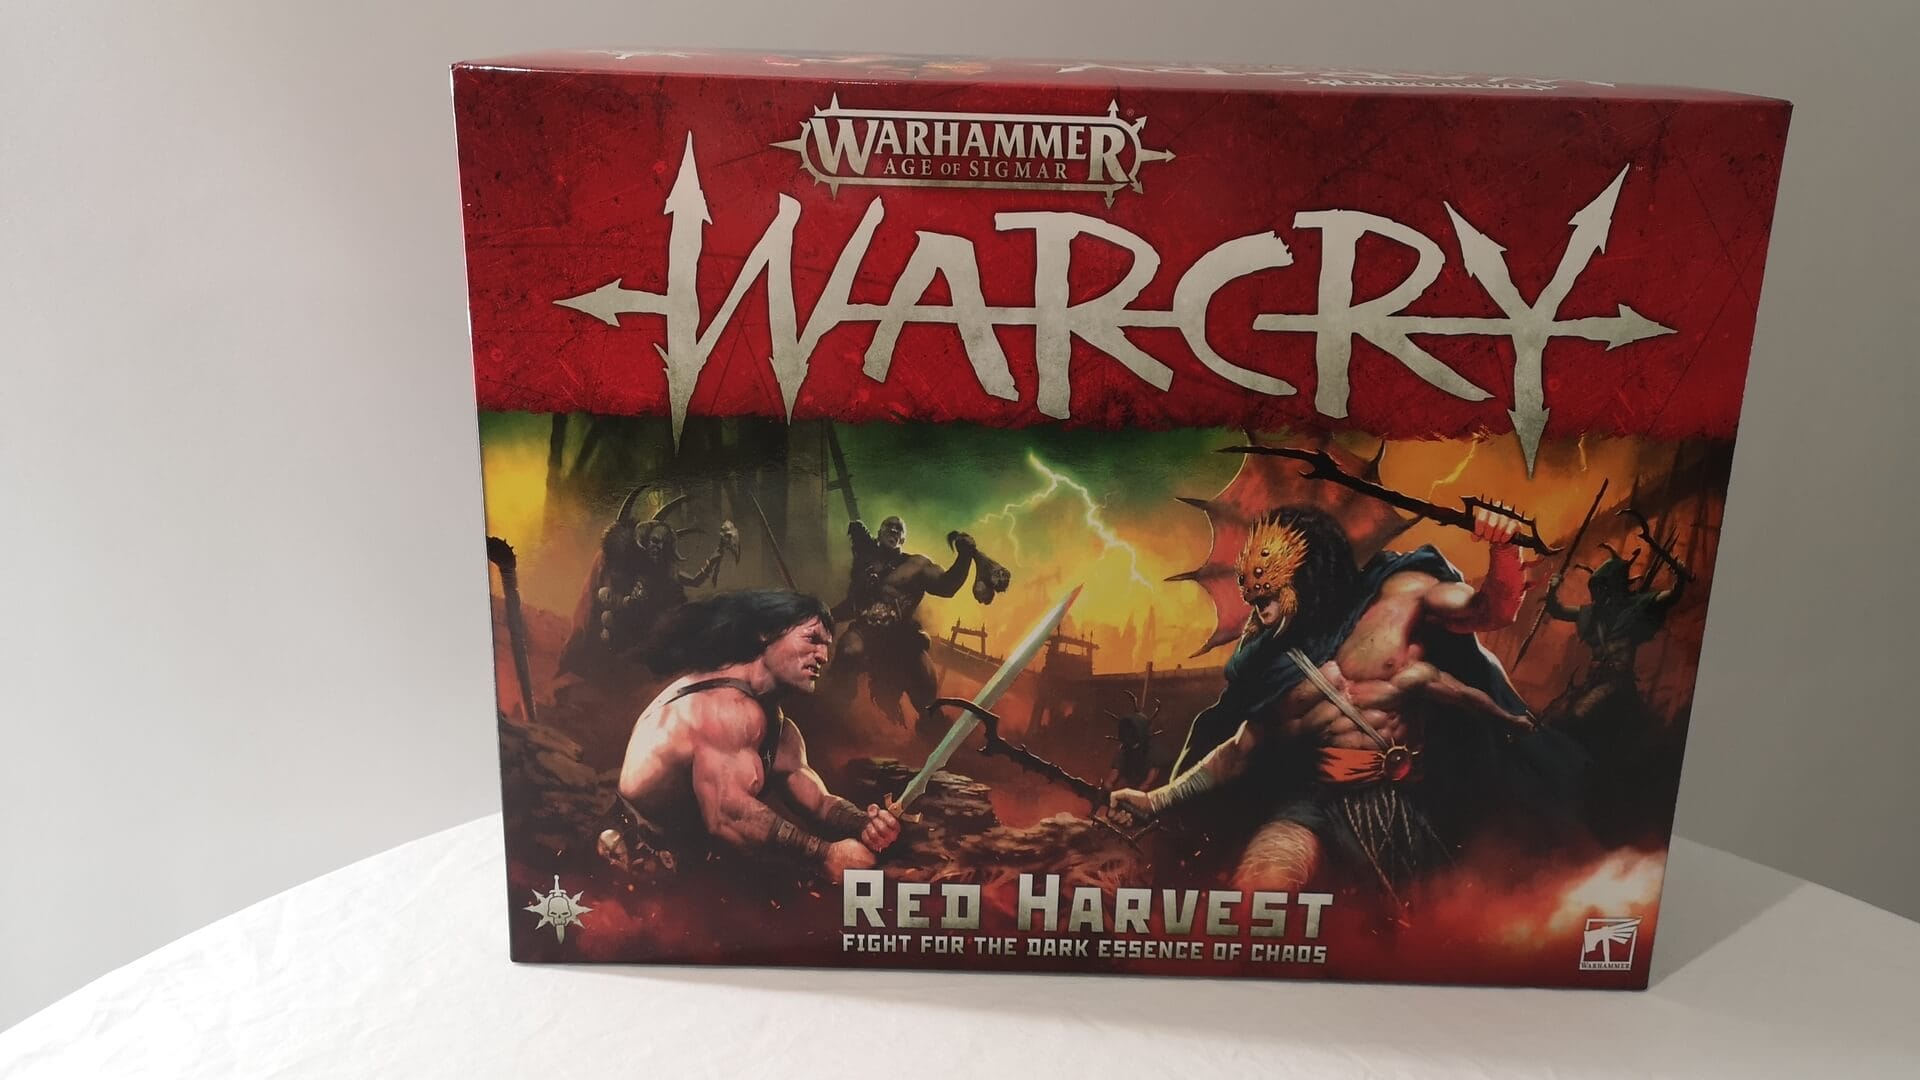 Warhammer-WarCry-Red Harvest cosecha roja-darkoath savagers-gloryseeker 2